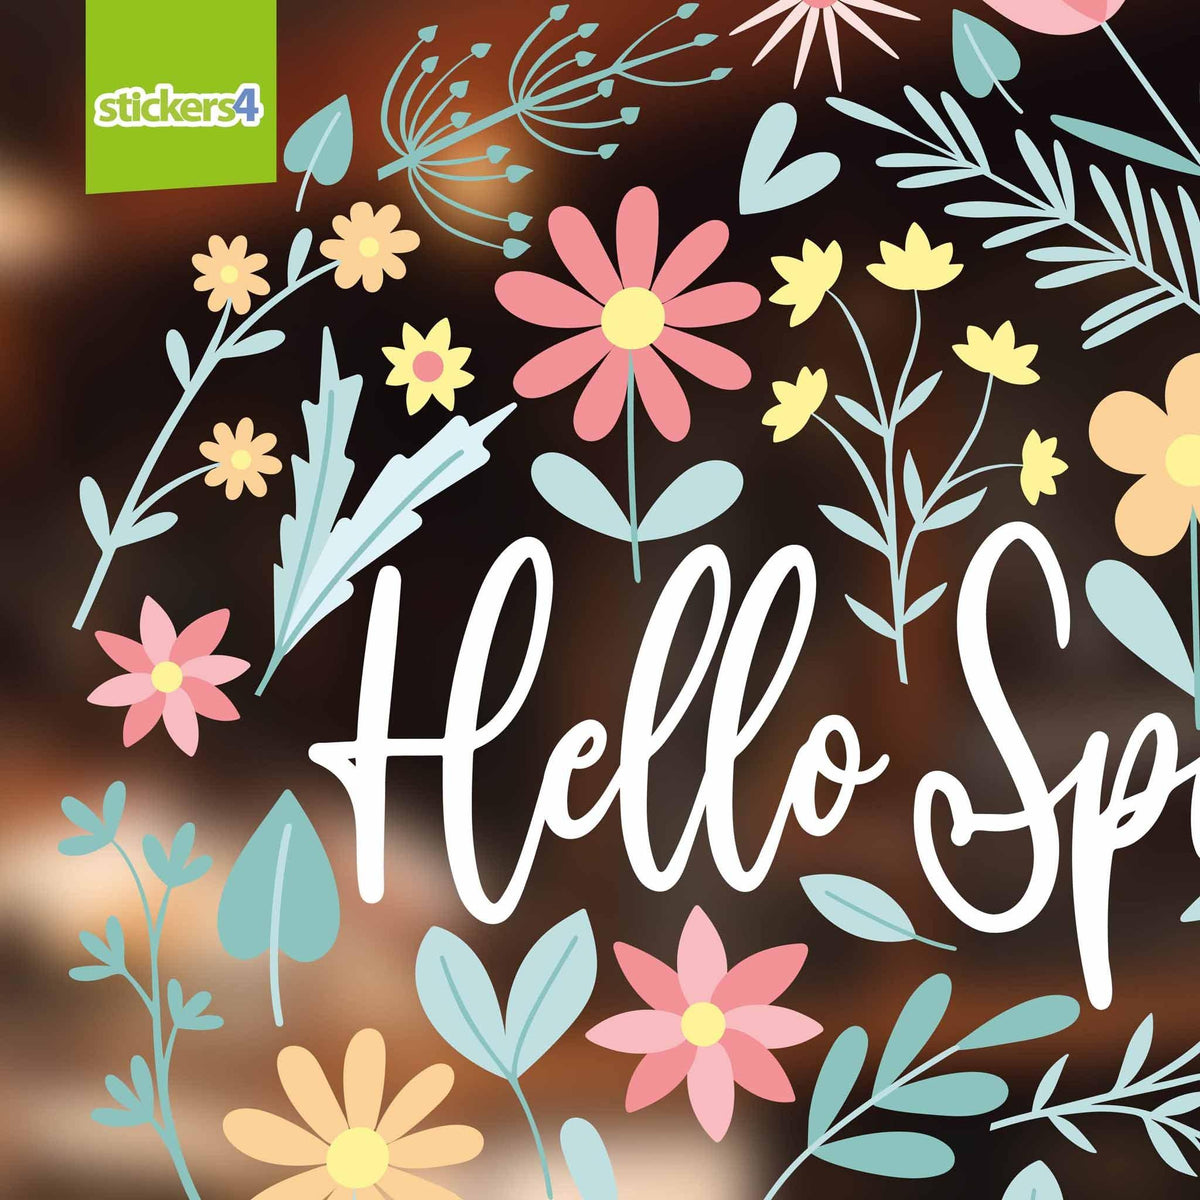 Hello Spring Floral Roundel Window Sticker Spring Window Display